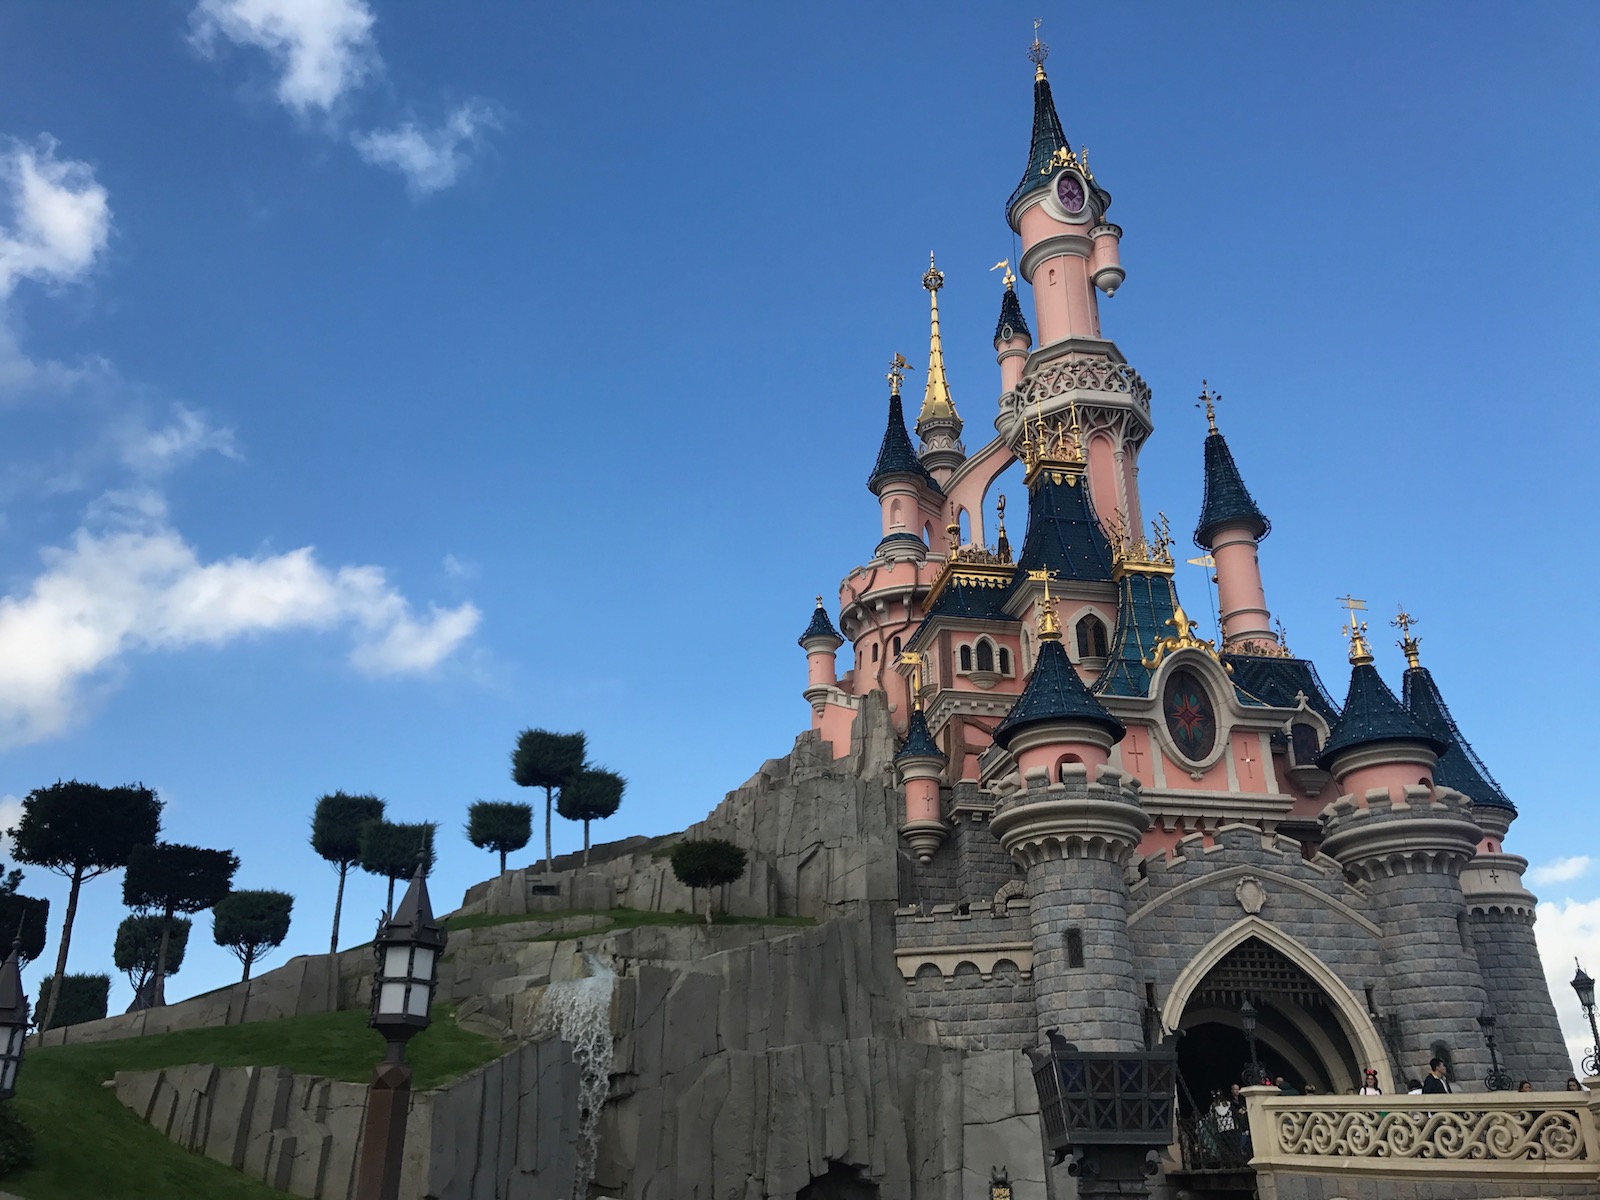 Disneyland Paris 2017 - Disneyland Park Review